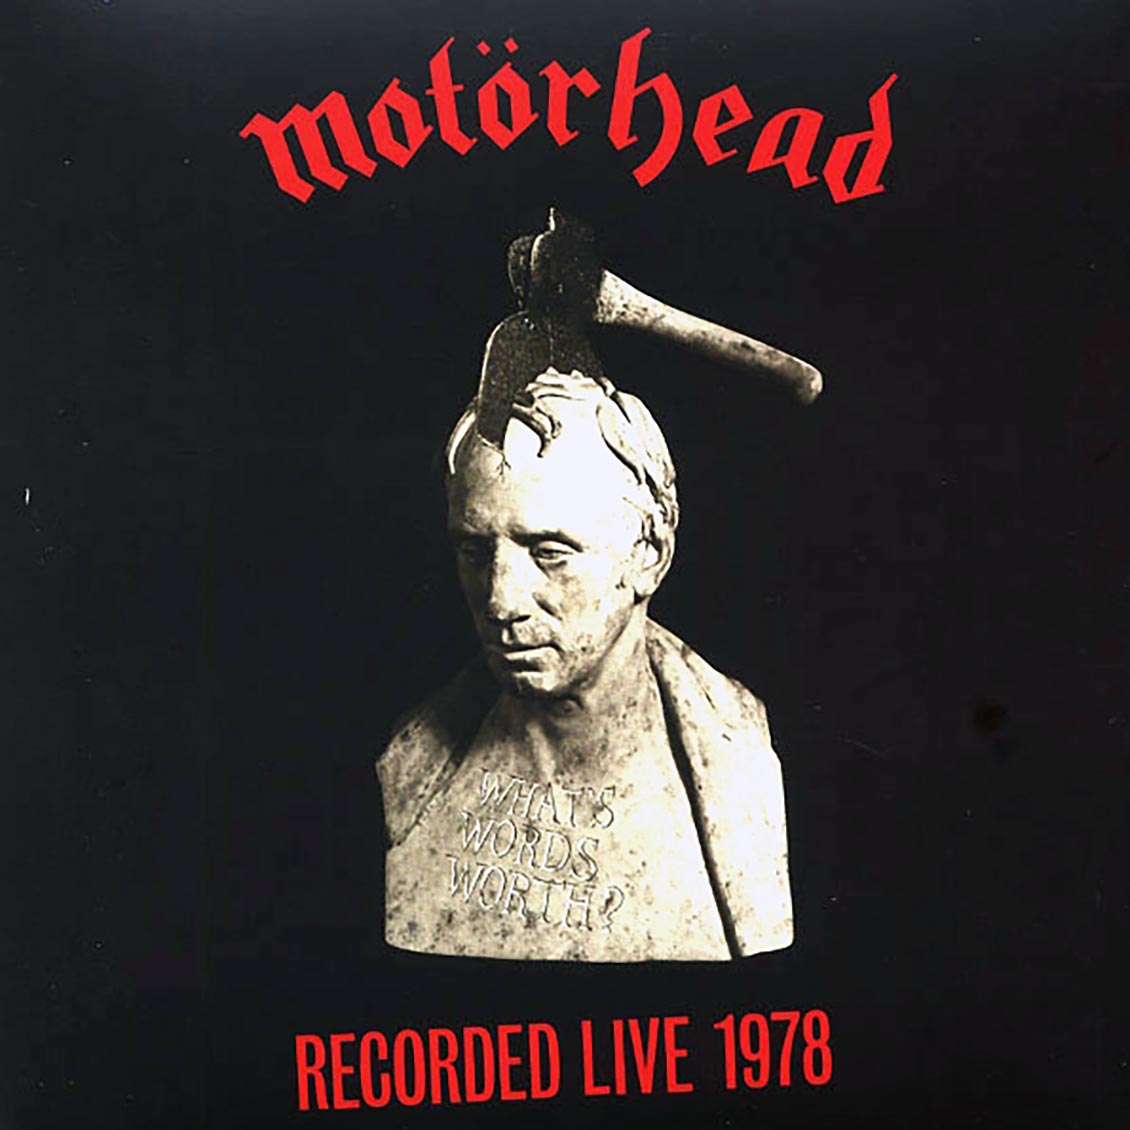 Motorhead - What's Words Worth? Recorded Live 1978 (180g) (colored vinyl) - Vinyl LP